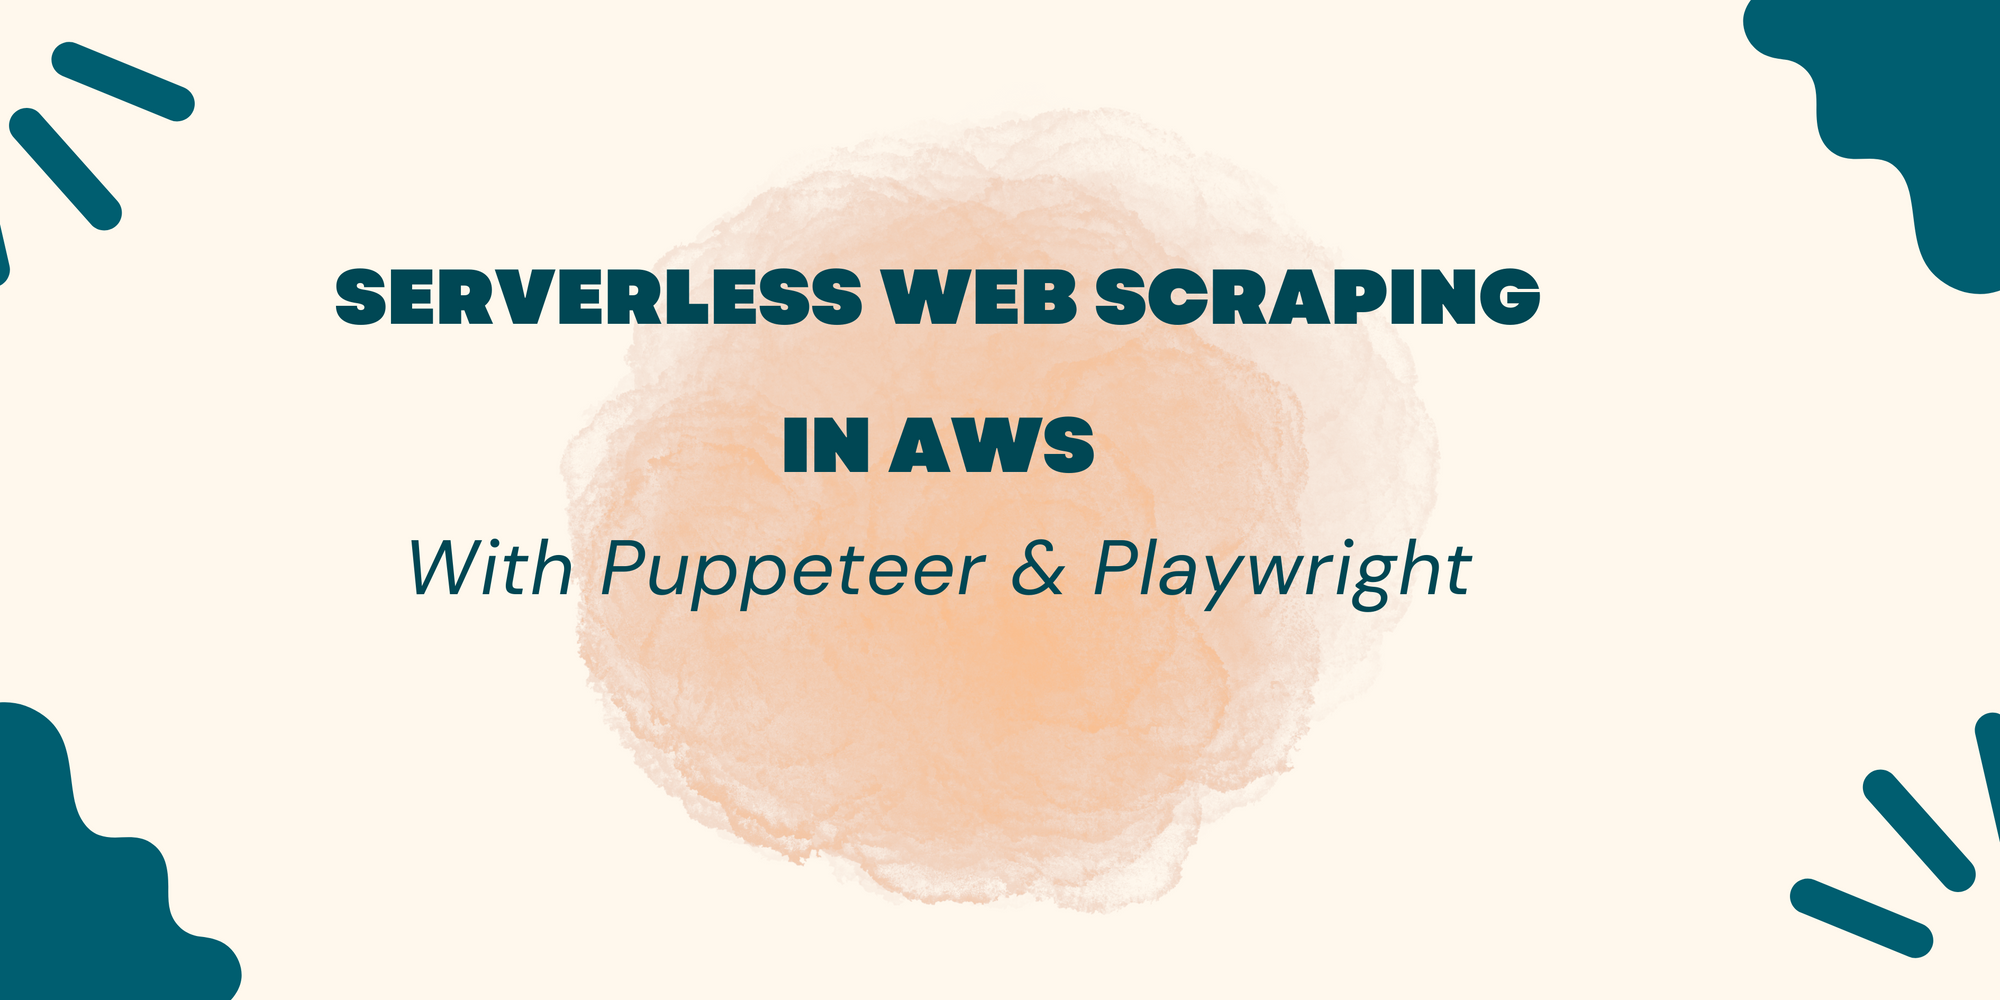 Serverless web scraping in AWS